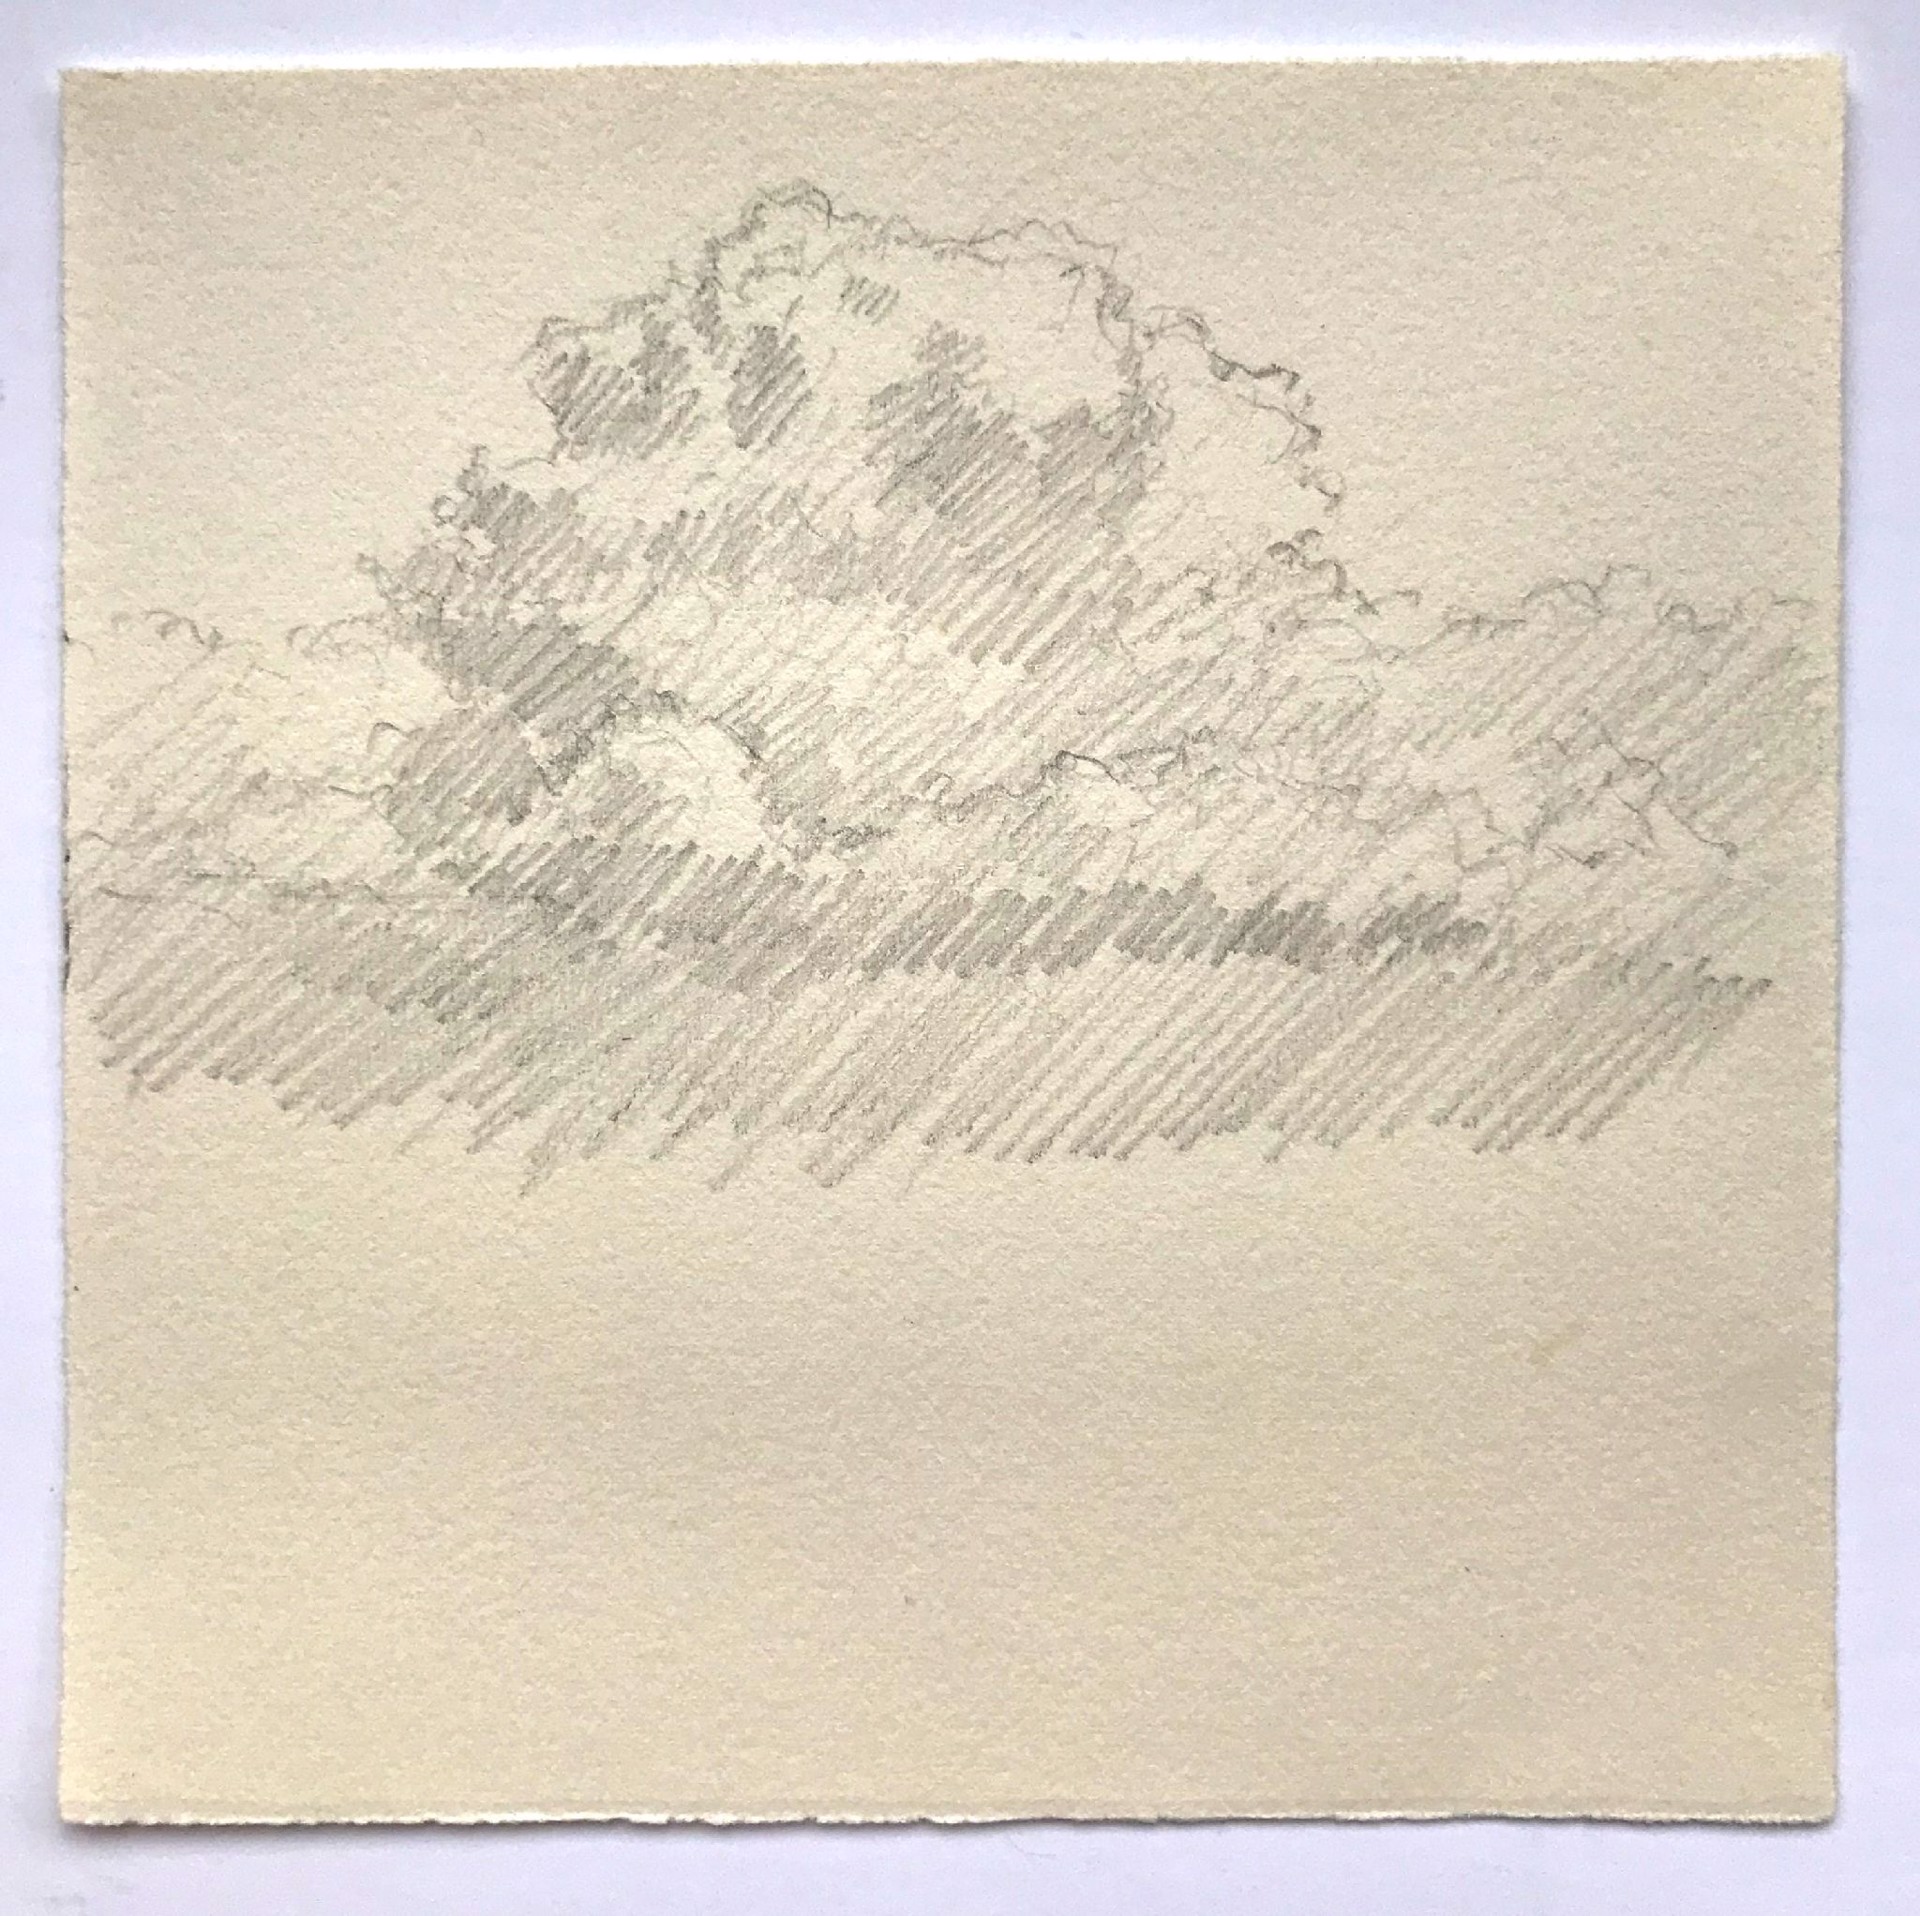 Cloud Sketch 01 by Dave Gordinier